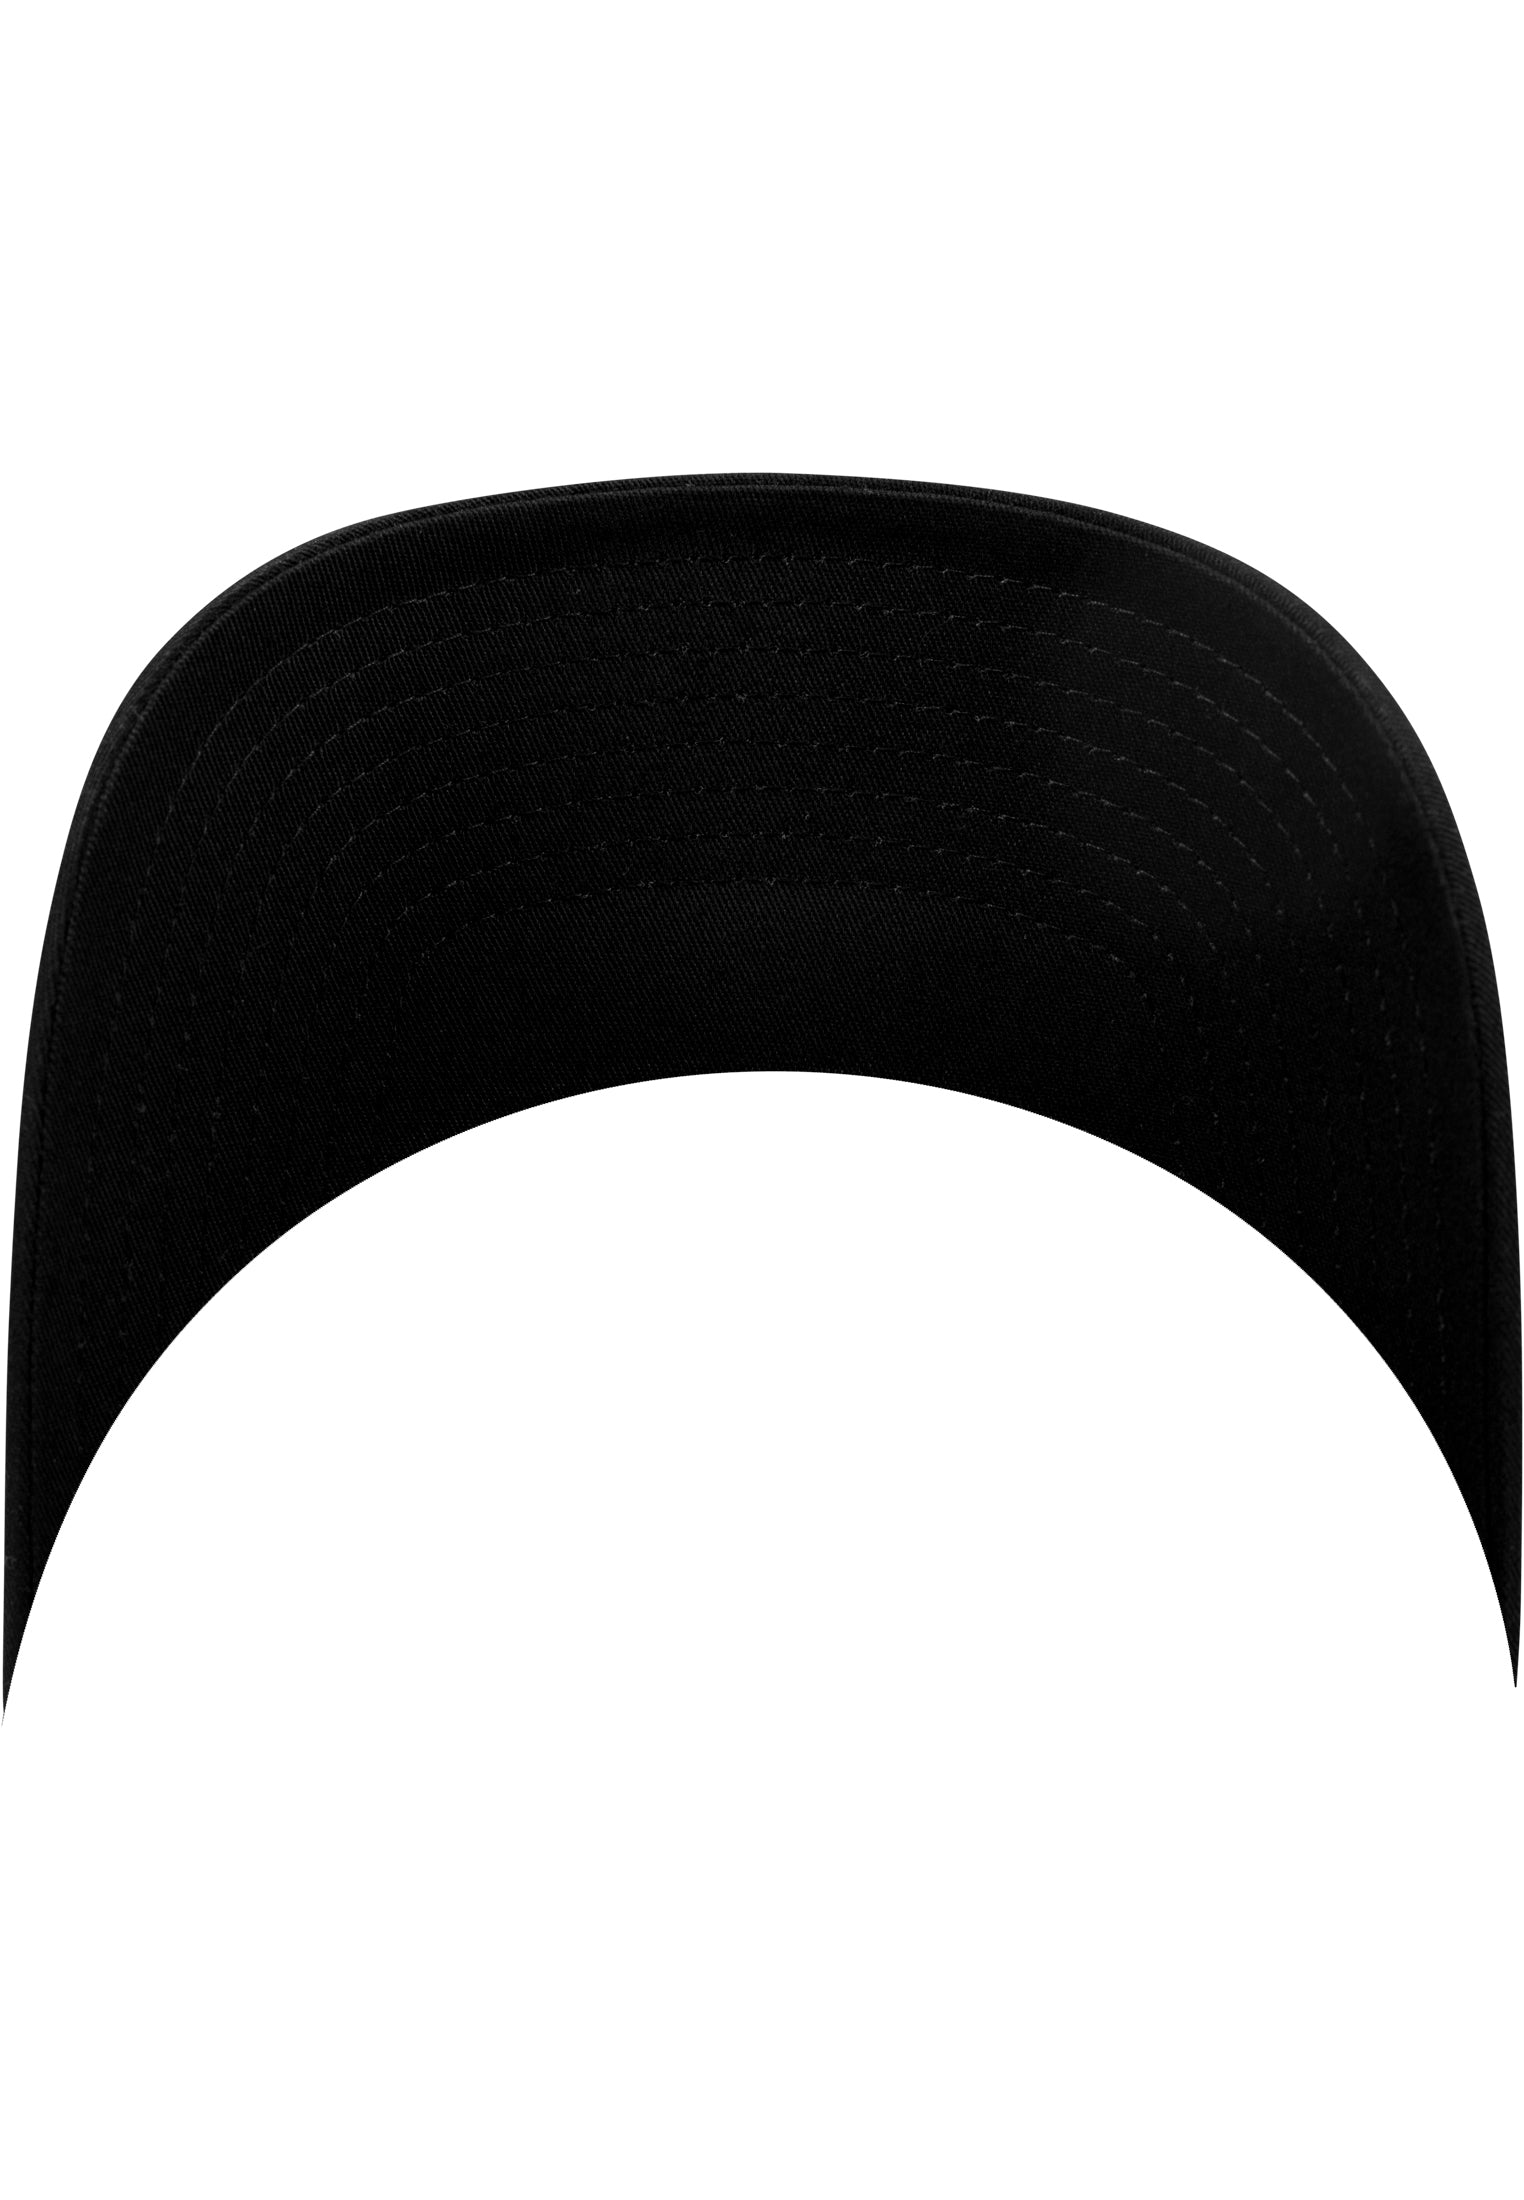 Curved Classic Snapback - Black - Headz Up 